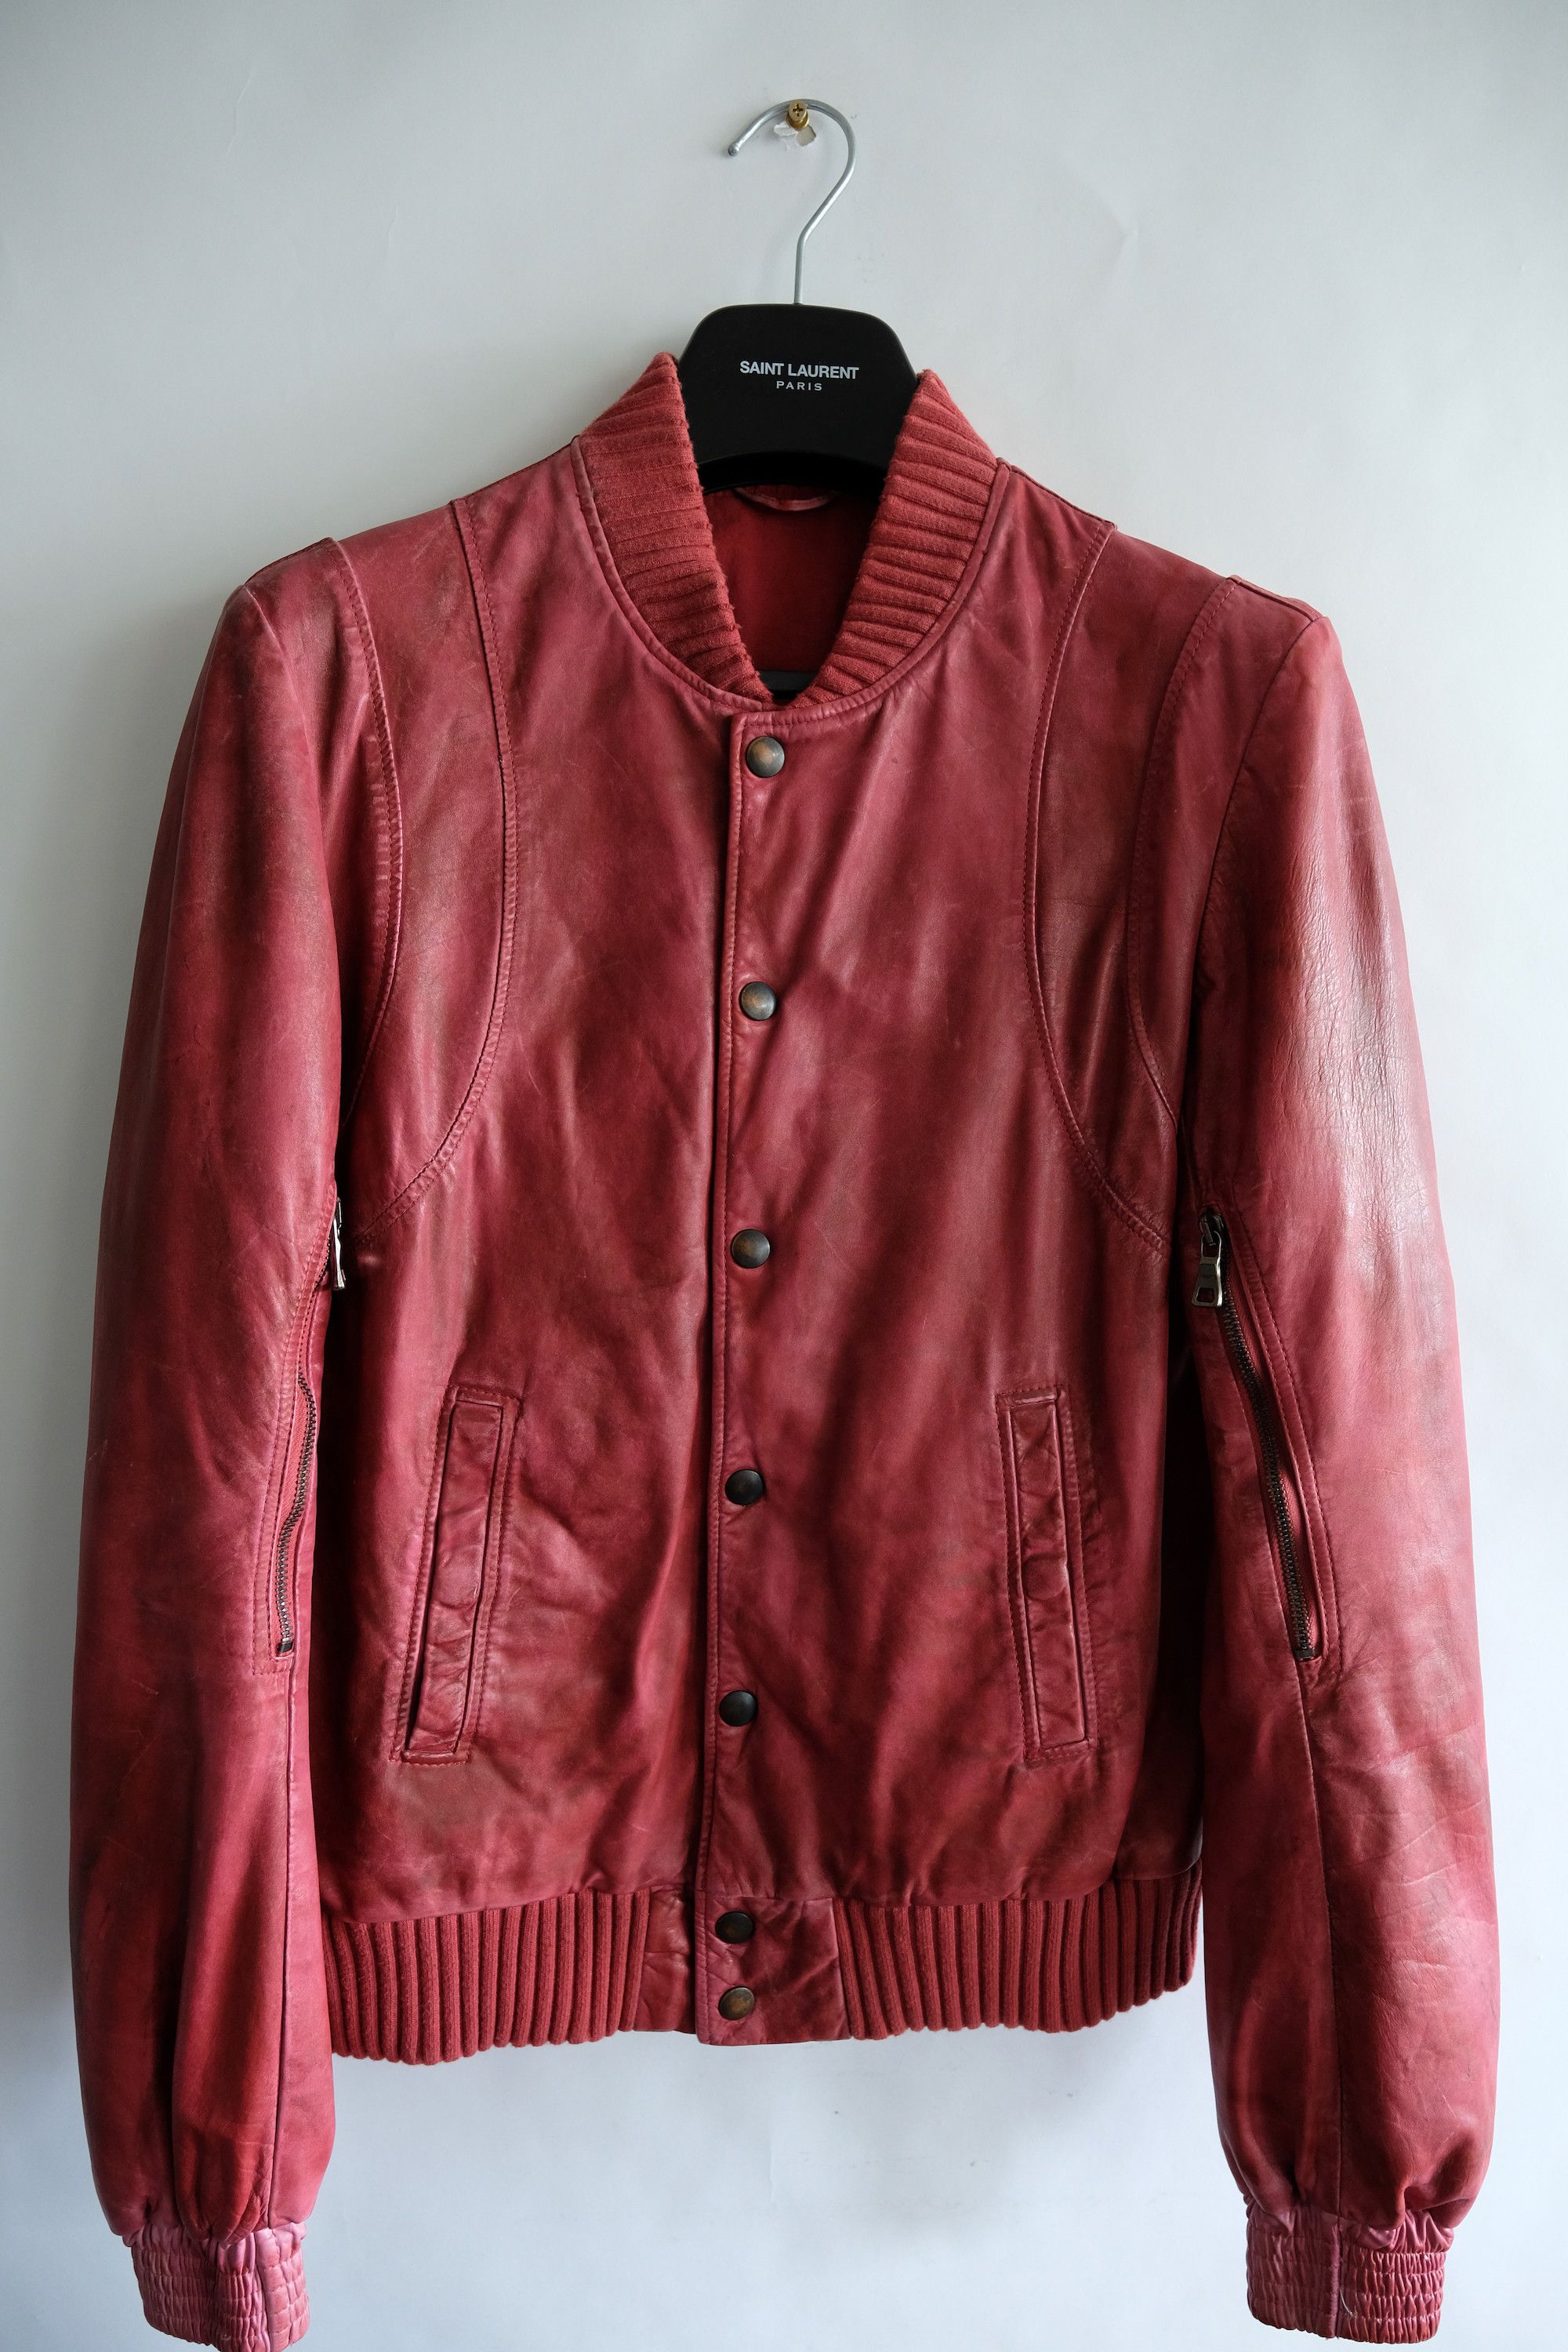 Balmain SS11 Silver Teddy Leather Jacket - Ākaibu Store